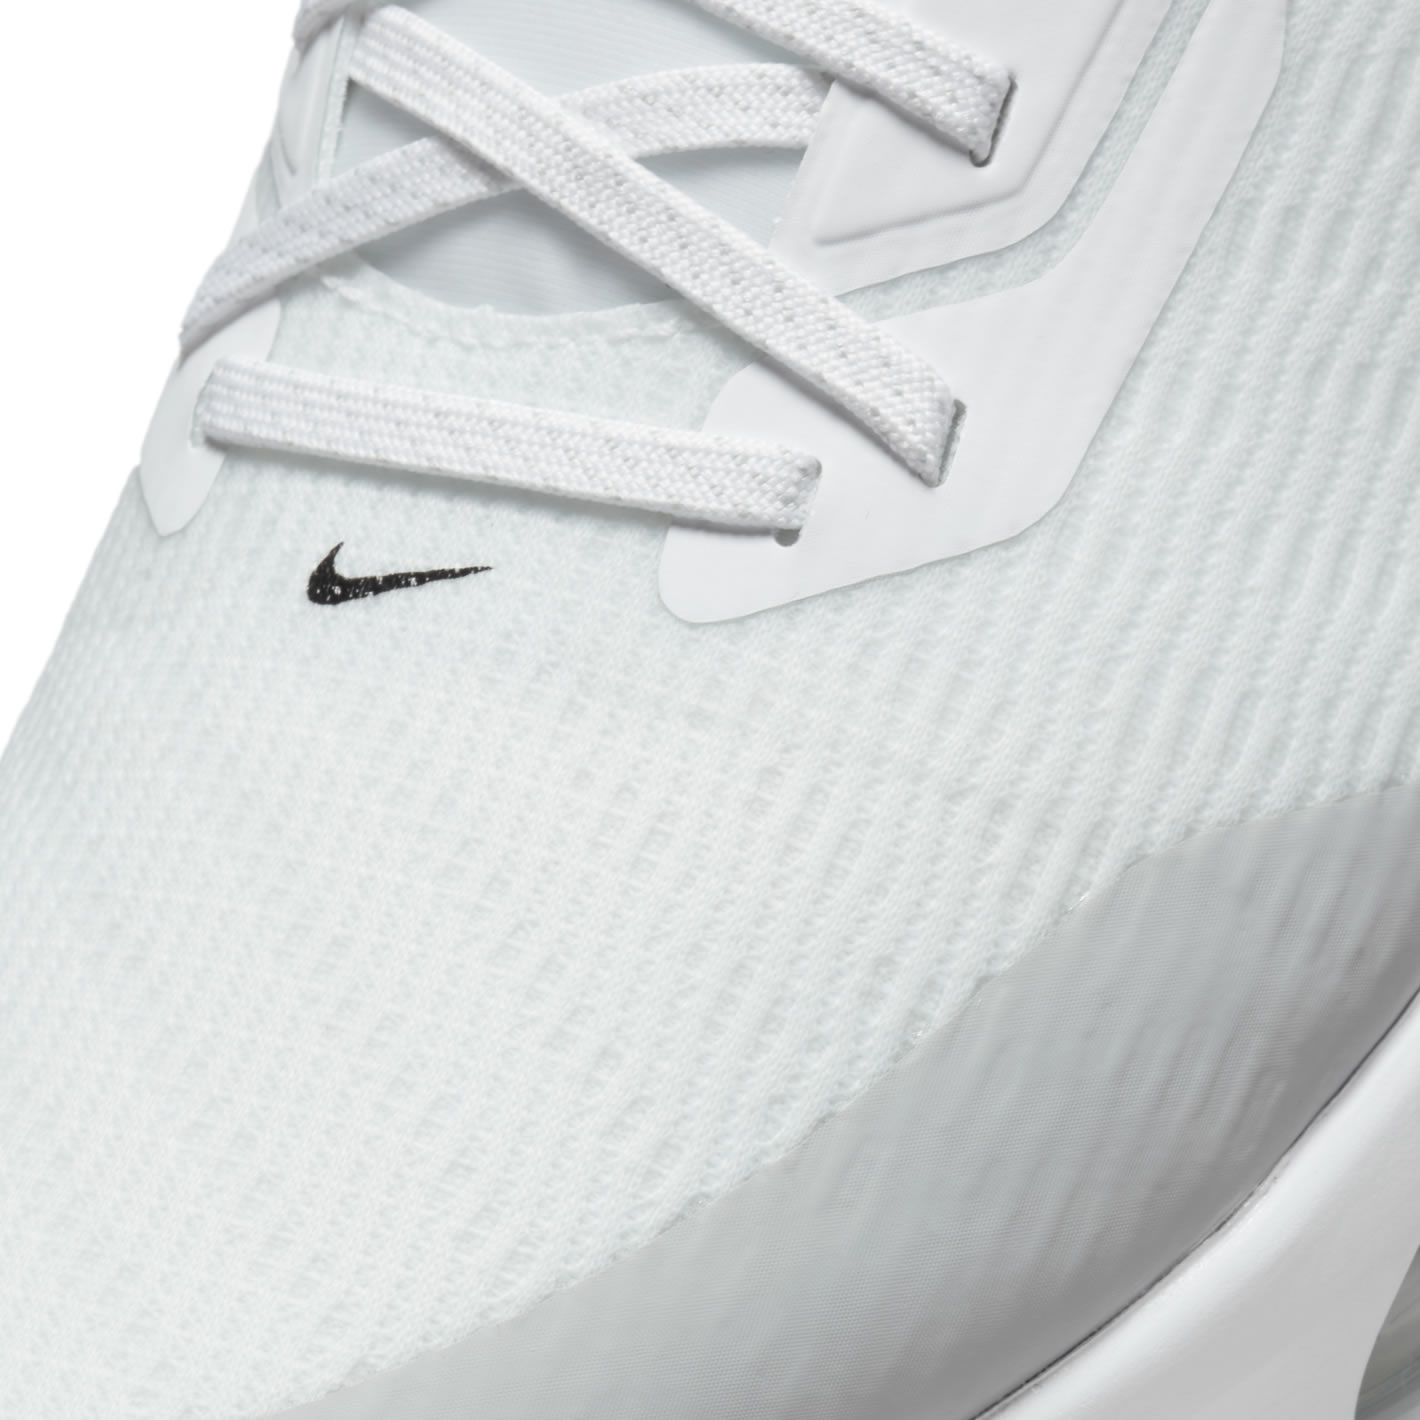 Nike Air Zoom Infinity Tour NXT% Golf Shoes White/Black/Grey Fog